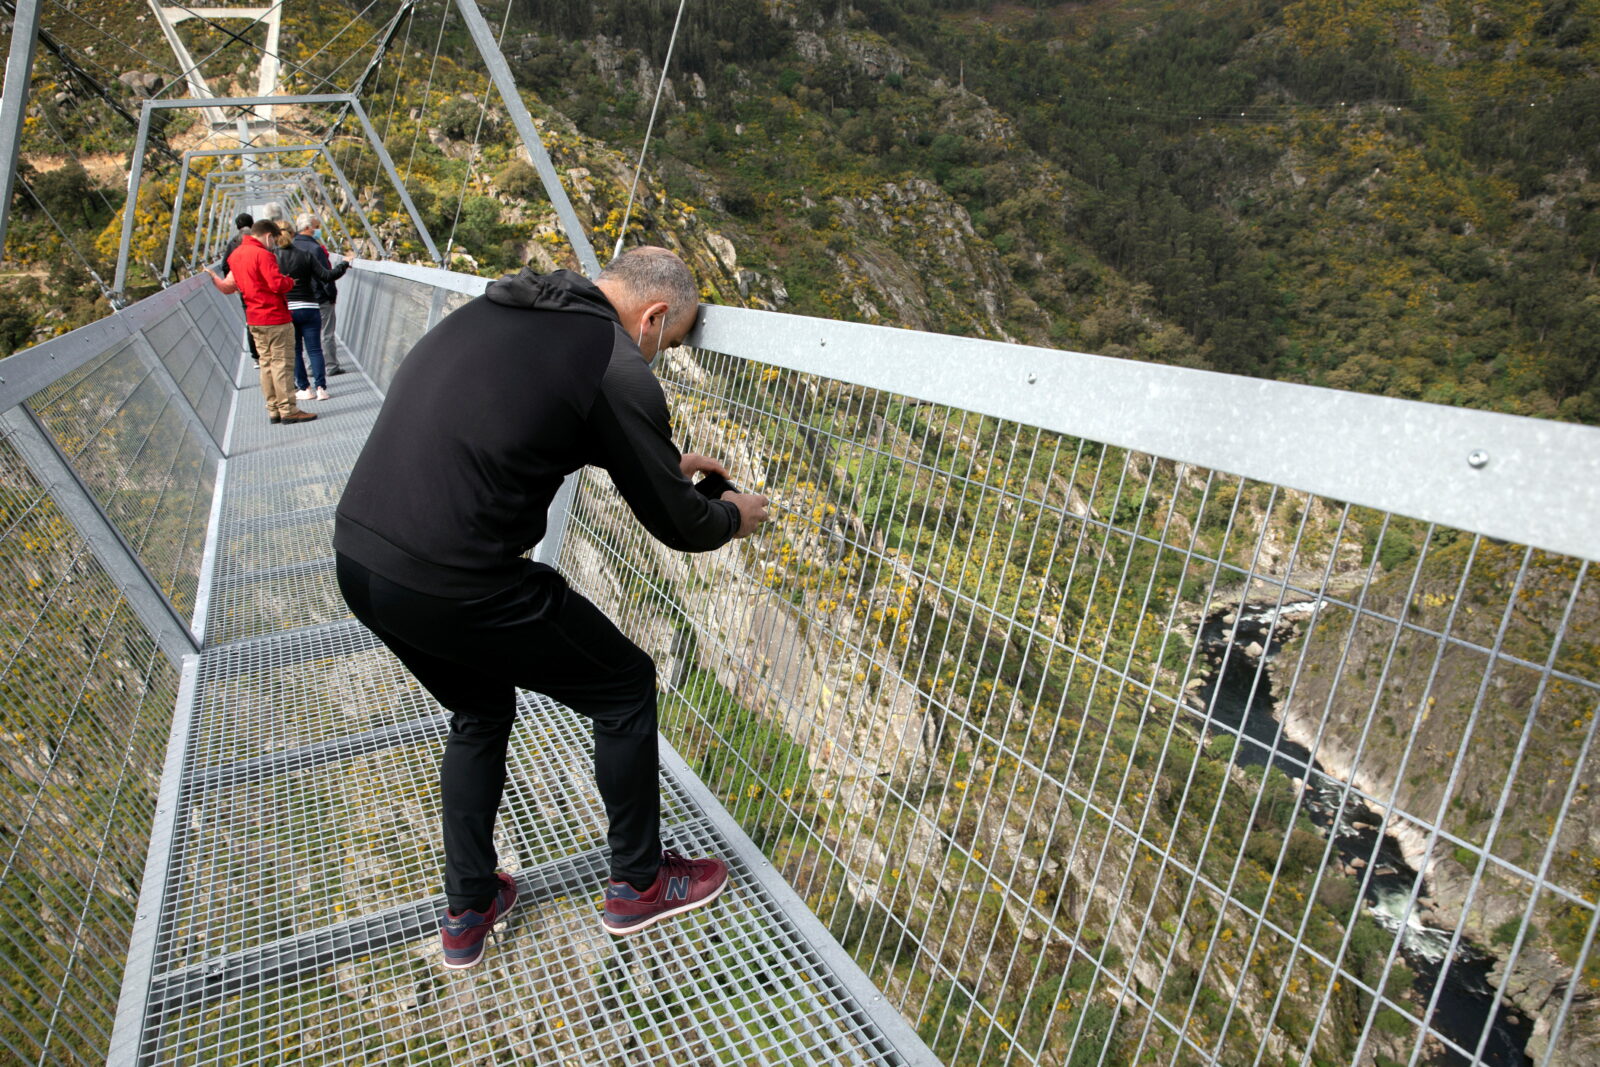 People walk on the world's longest pedestrian suspension bridge '516 Arouca', in Arouca